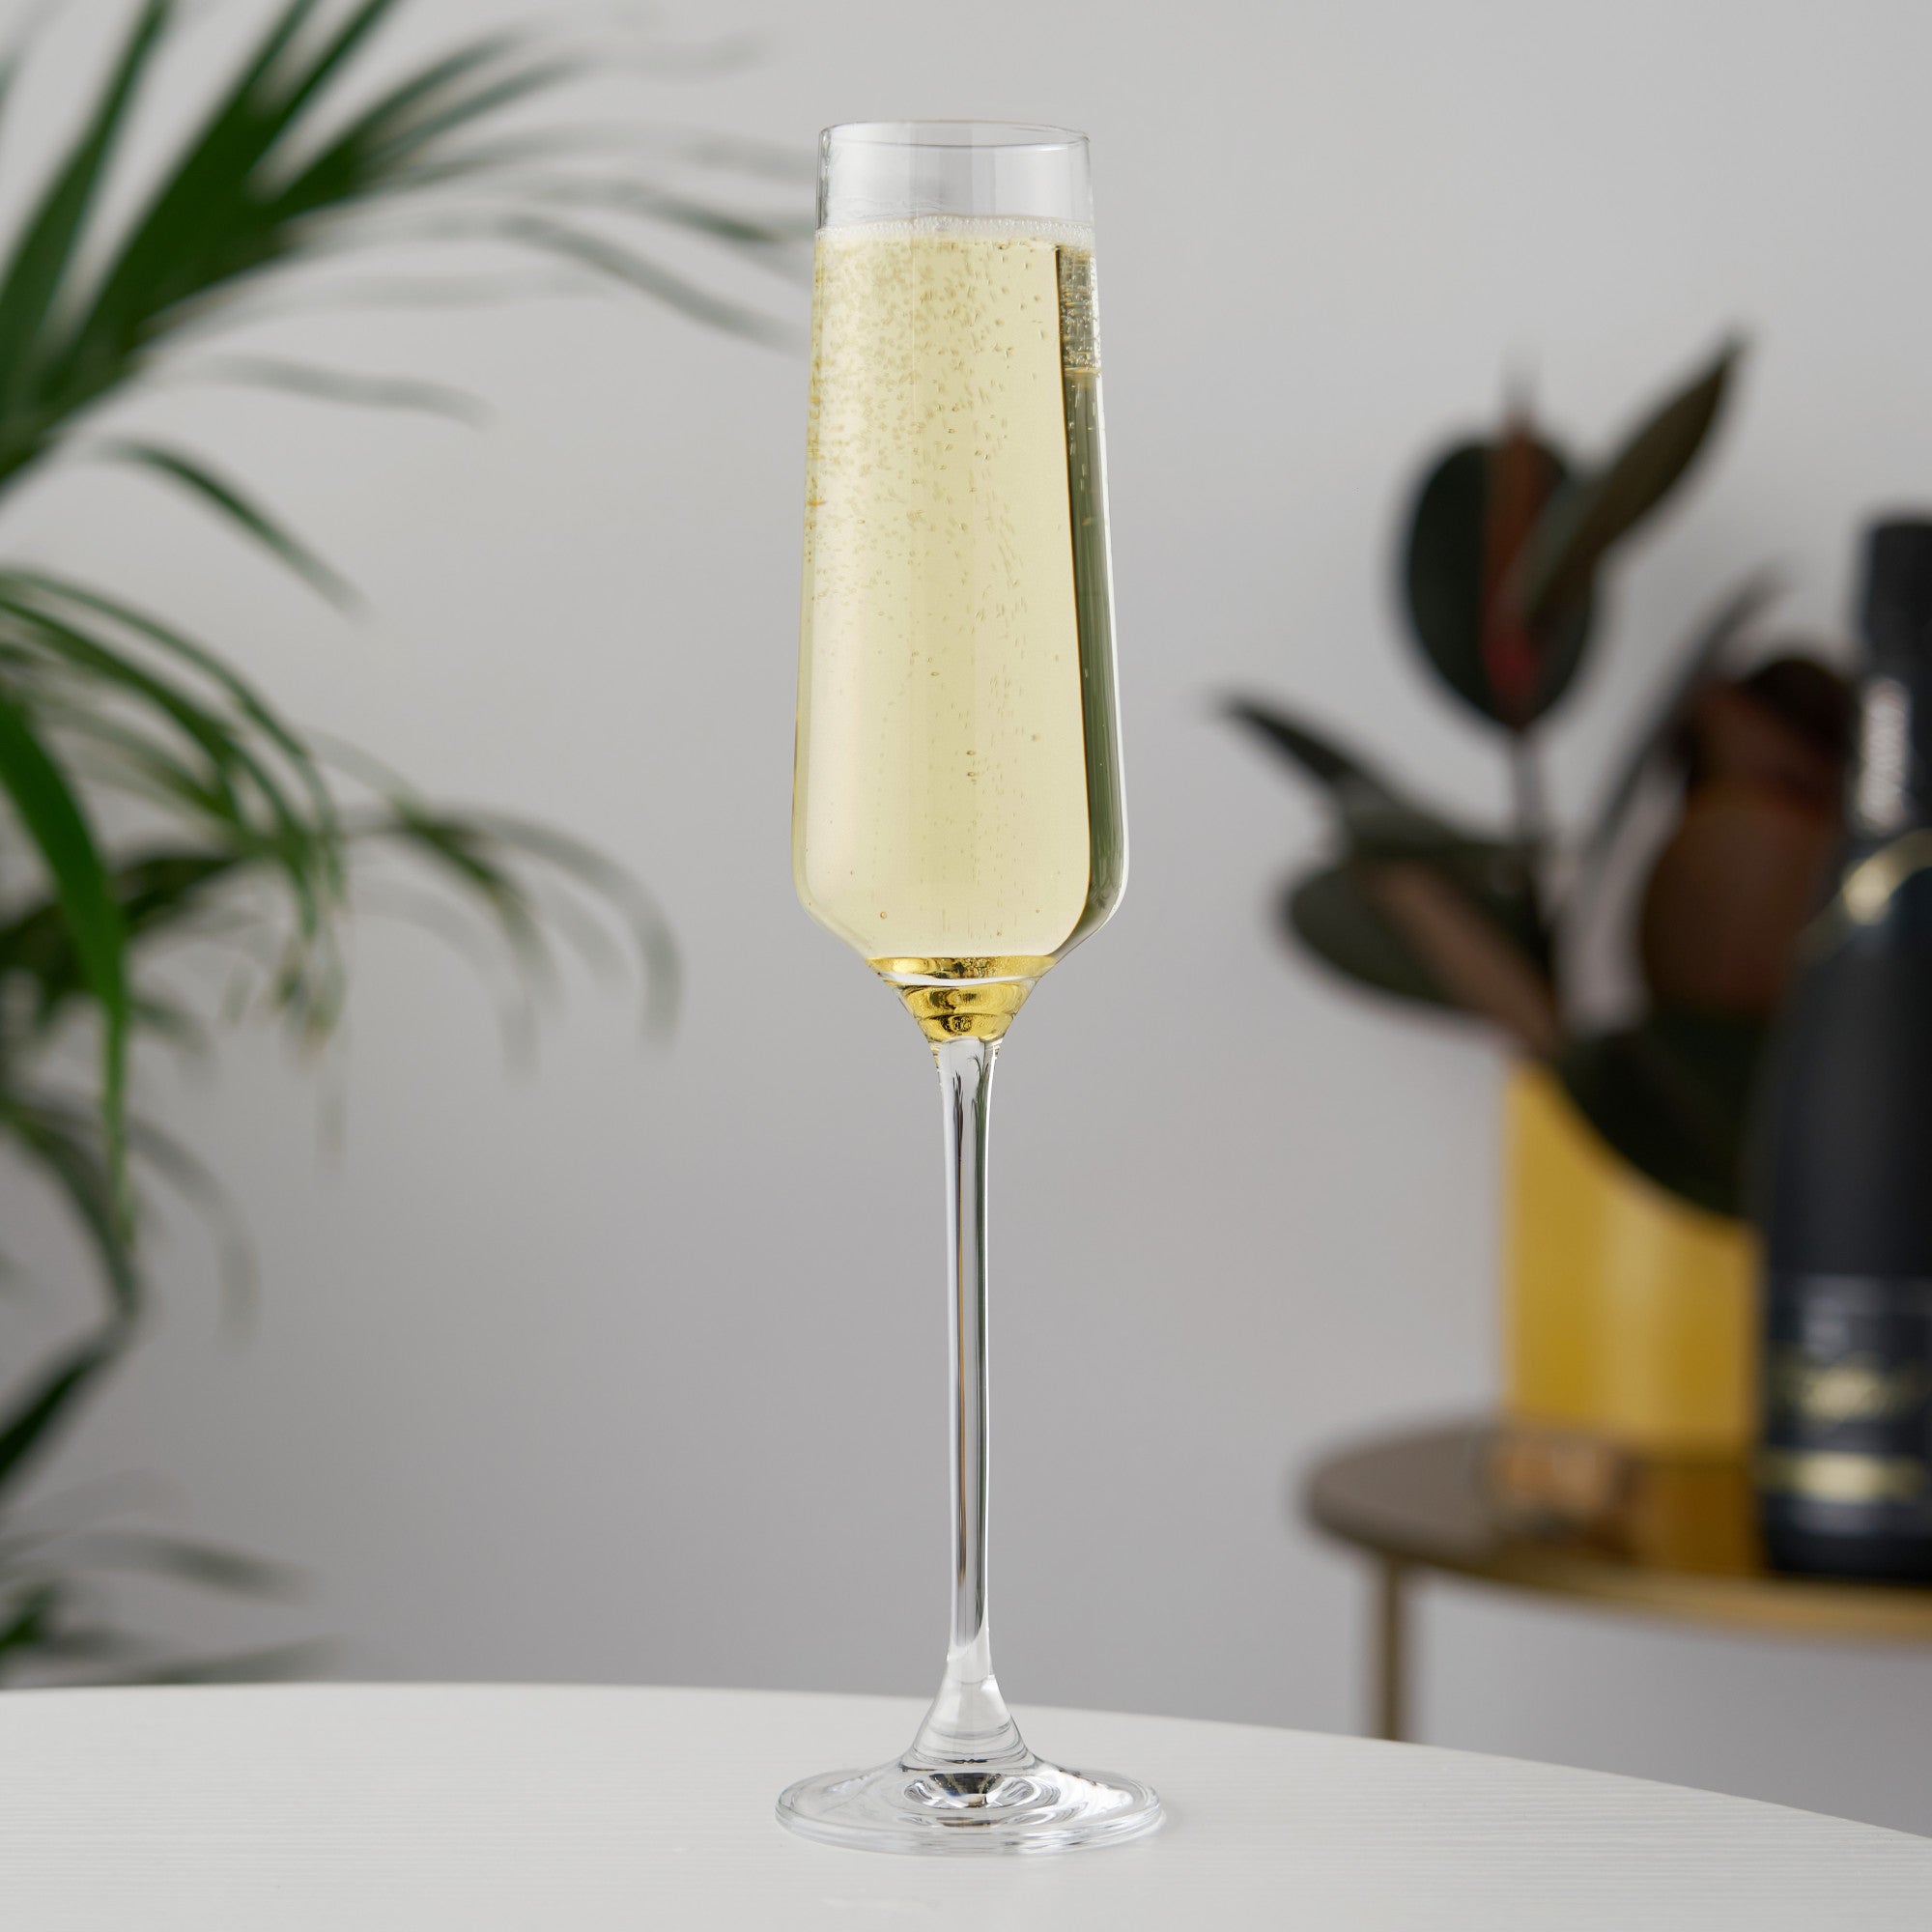 European Crystal Champagne Flutes by Viski® (10103) Drinkware Viski